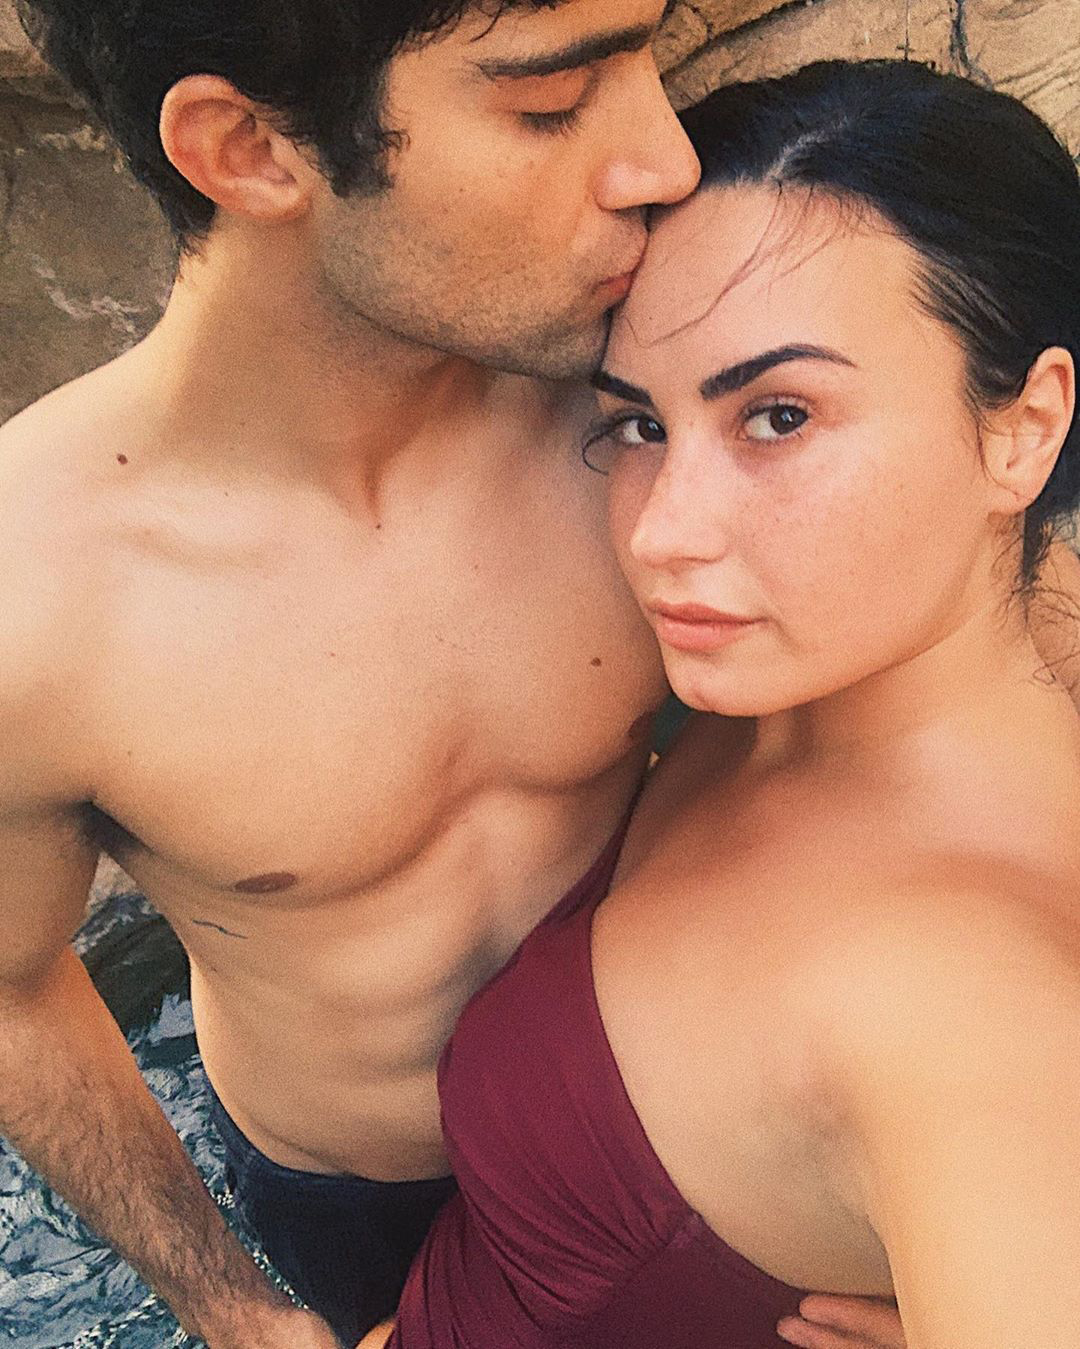 Demi Lovato Shares Steamy Photos With Boyfriend Max Ehrich on His 29th Birthday